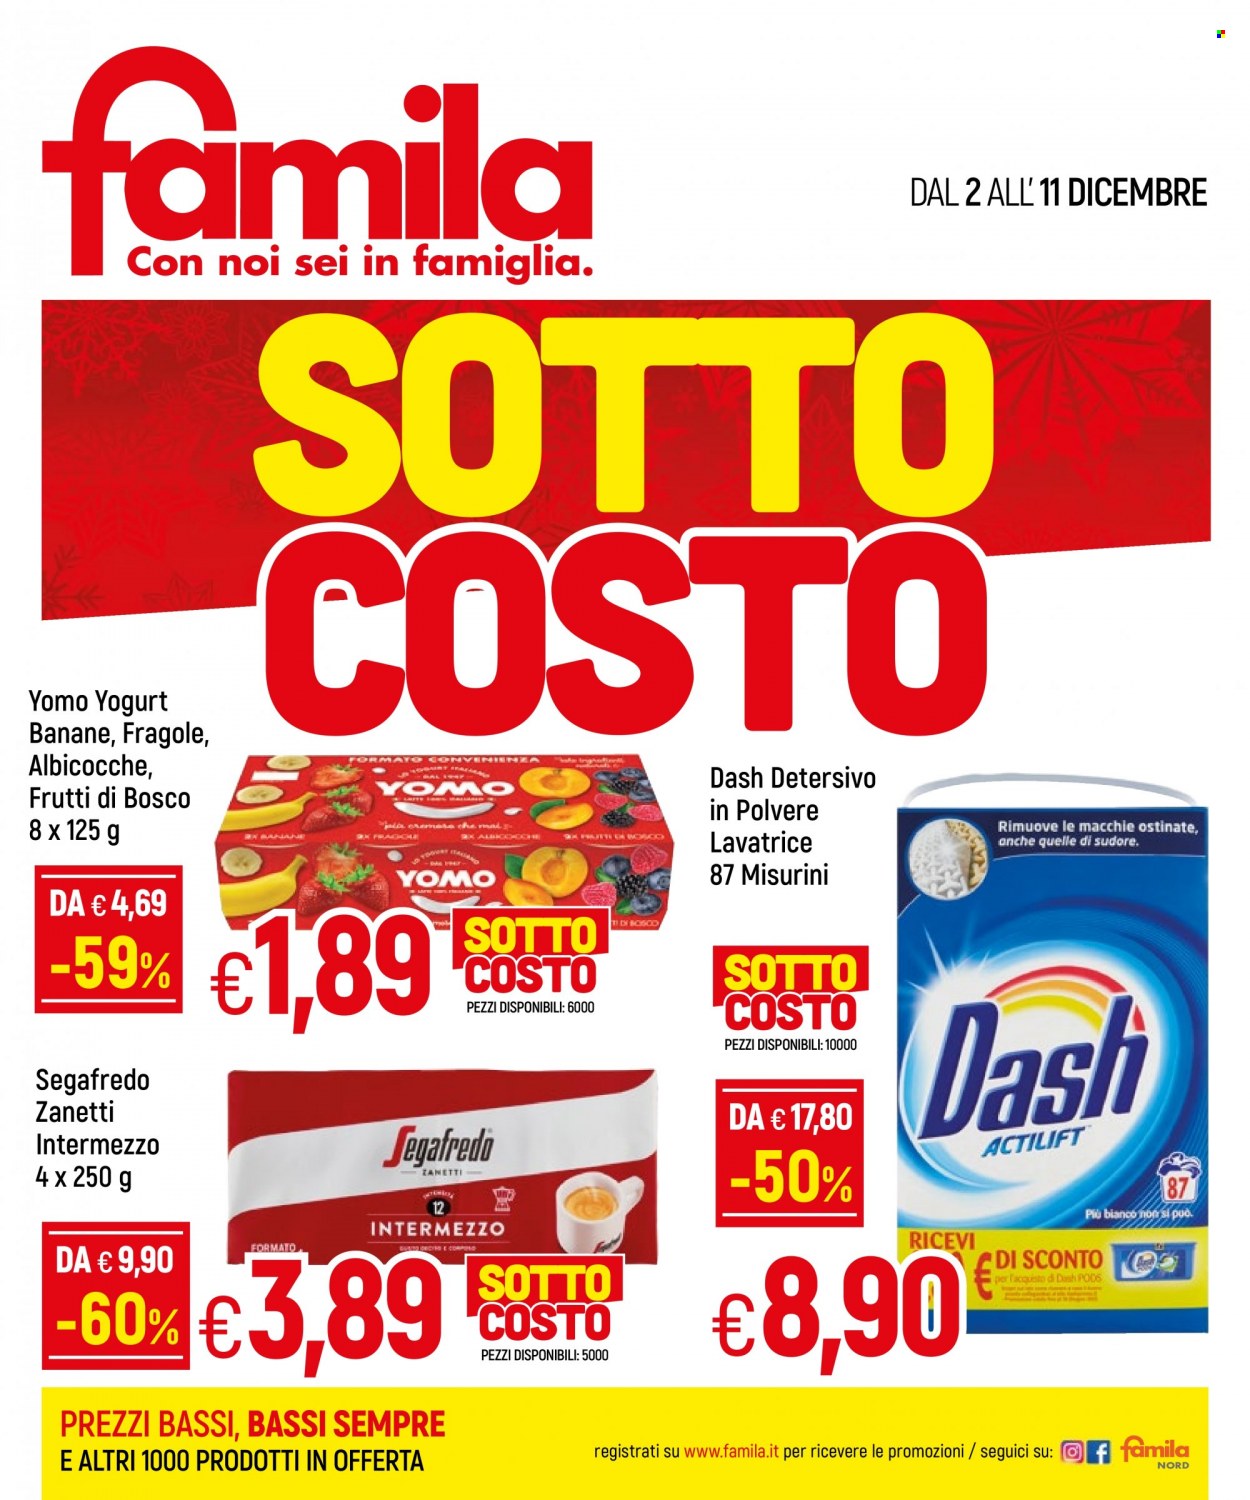 thumbnail - Volantino Famila - 2/12/2021 - 11/12/2021 - Prodotti in offerta - banane, yogurt, Yomo, Segafredo, detersivo per lavatrice, Dash, detersivo per lavatrice in capsule. Pagina 1.